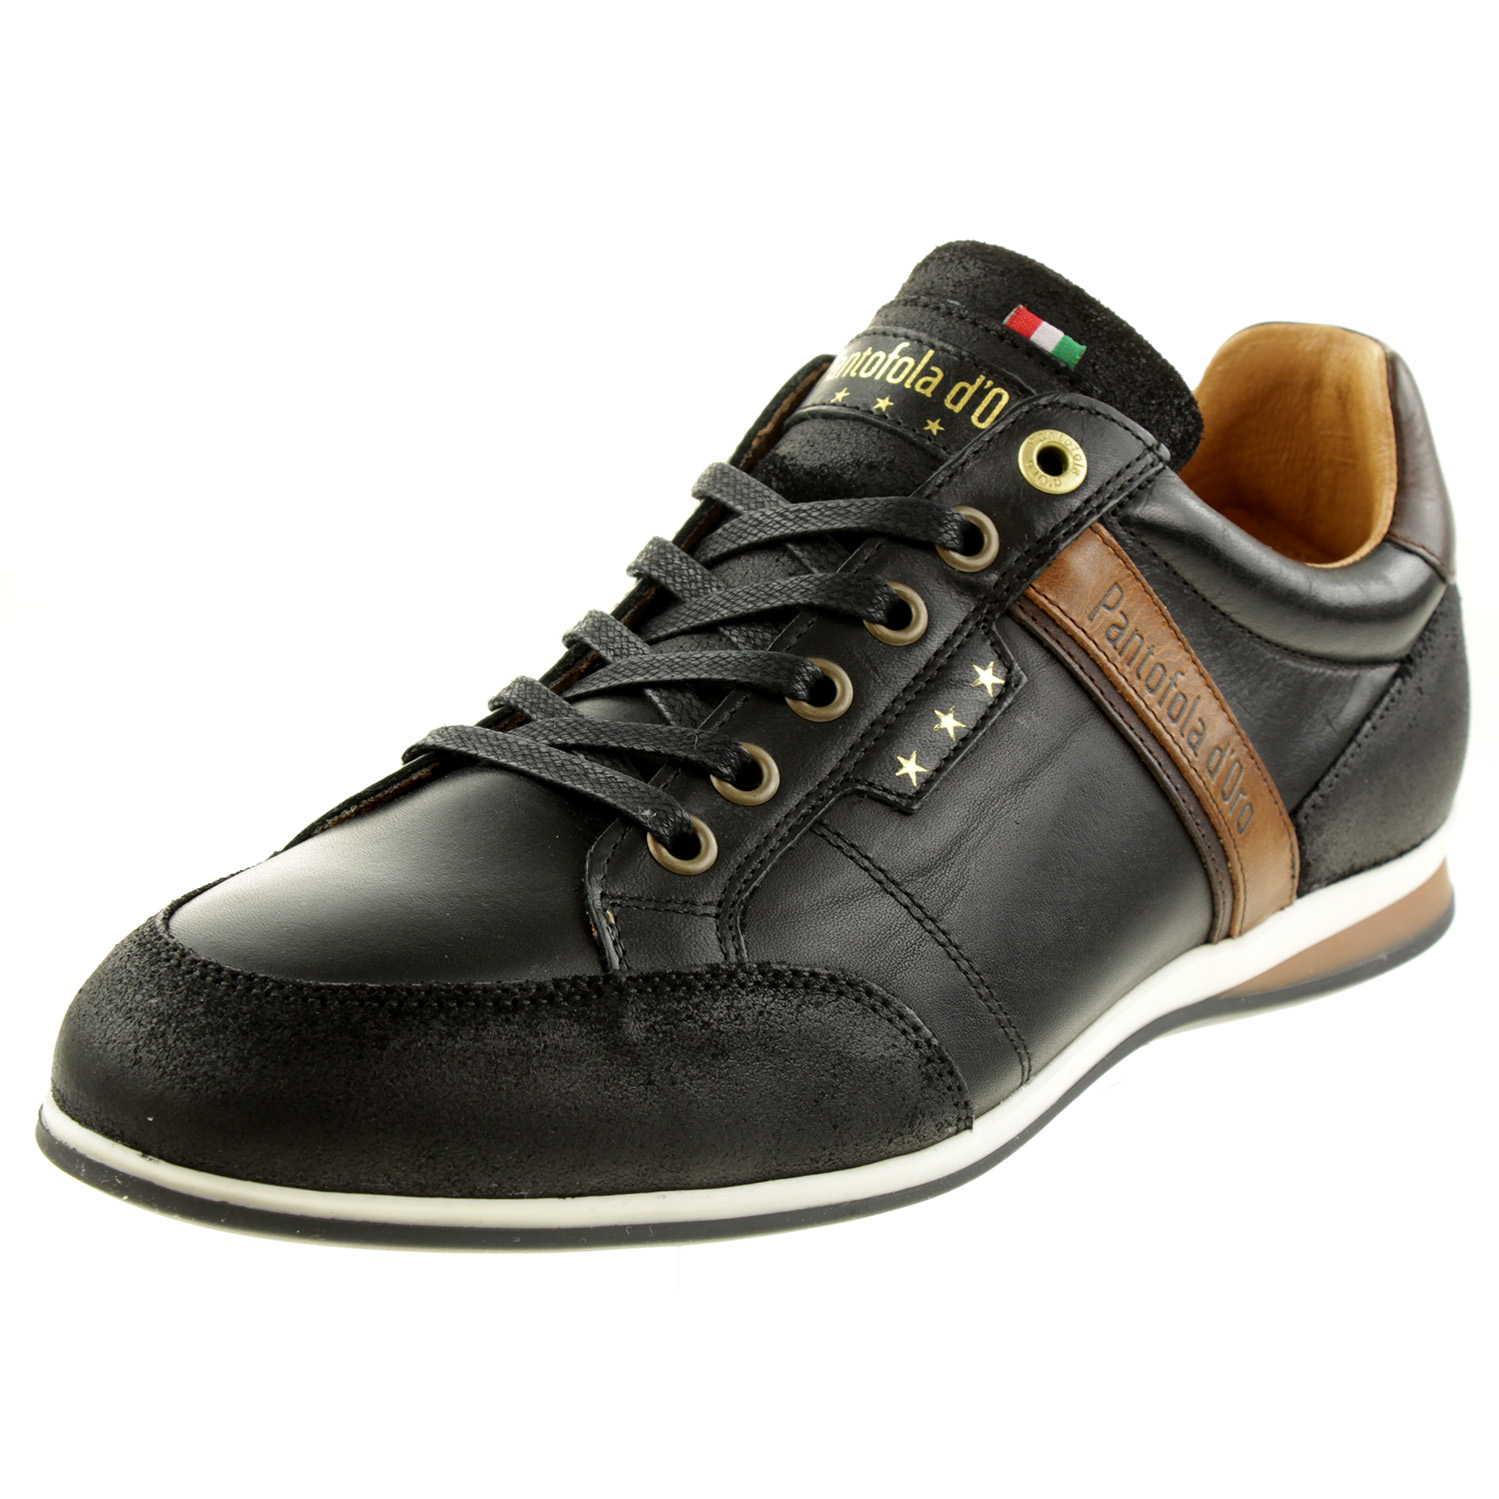 Pantofola d' Oro ROMA UOMO LOW Herren Sneaker schwarz Leder